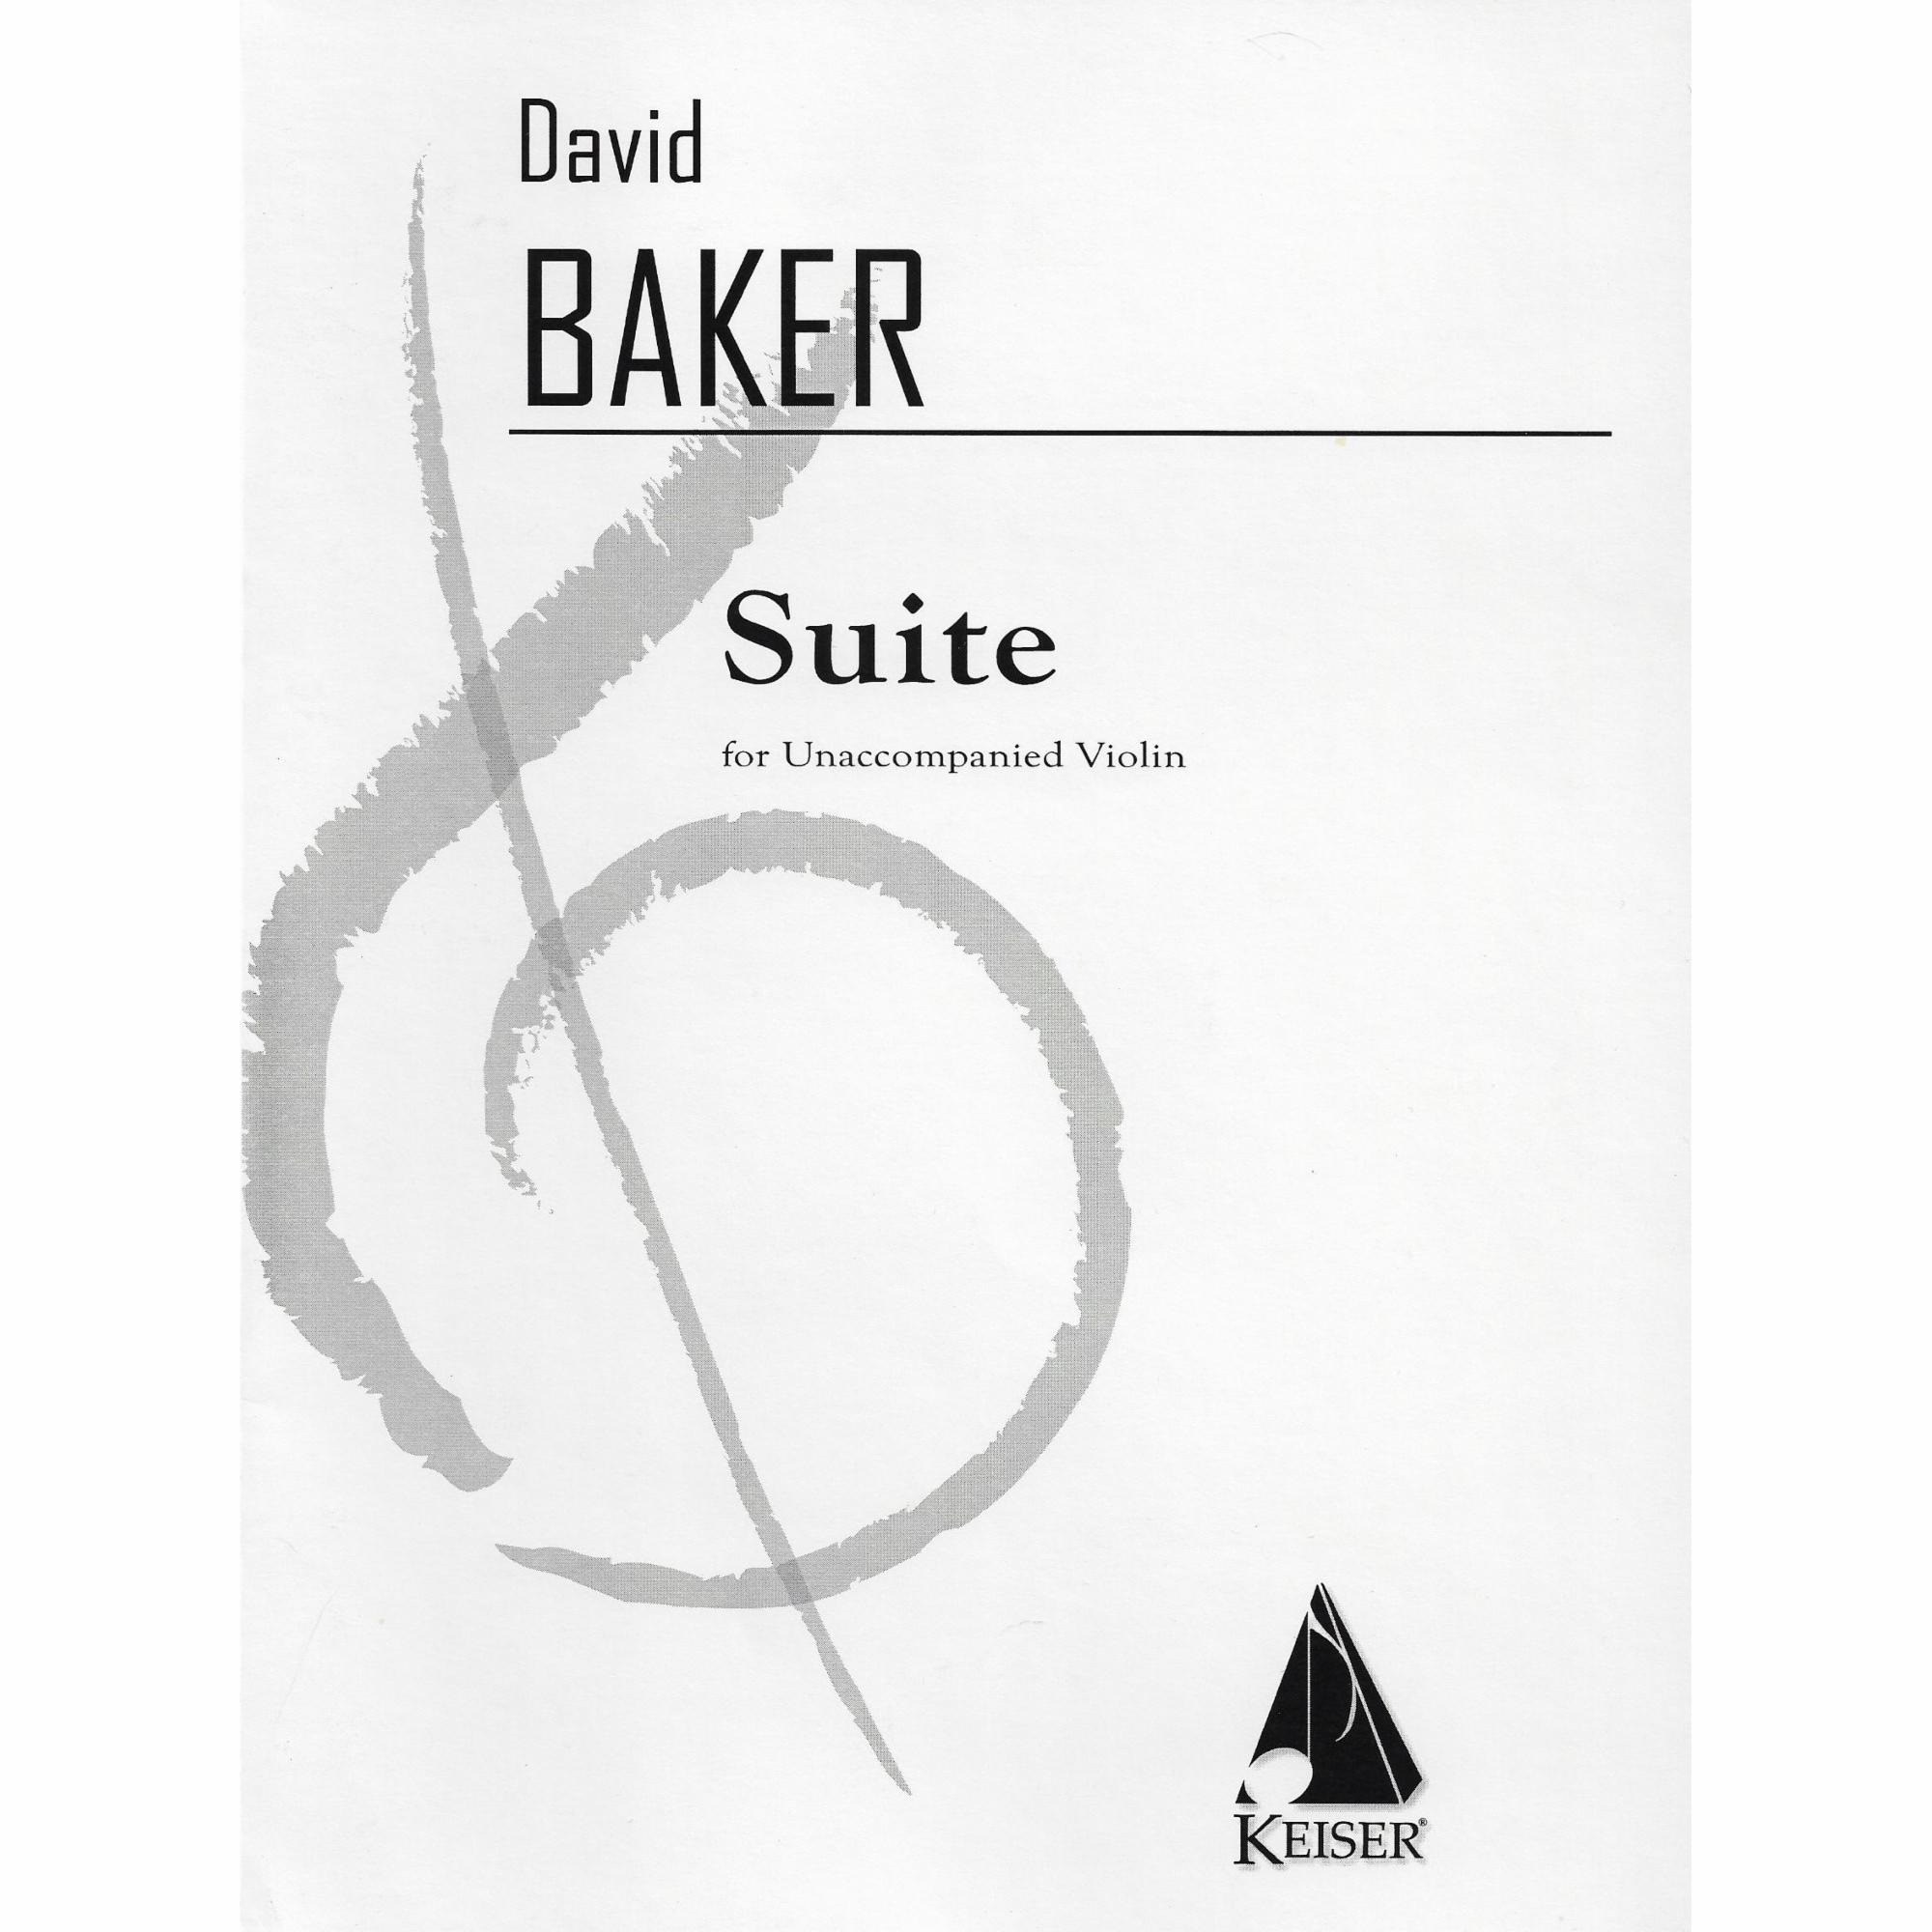 Baker -- Suite for Unaccompanied Violin (1981)